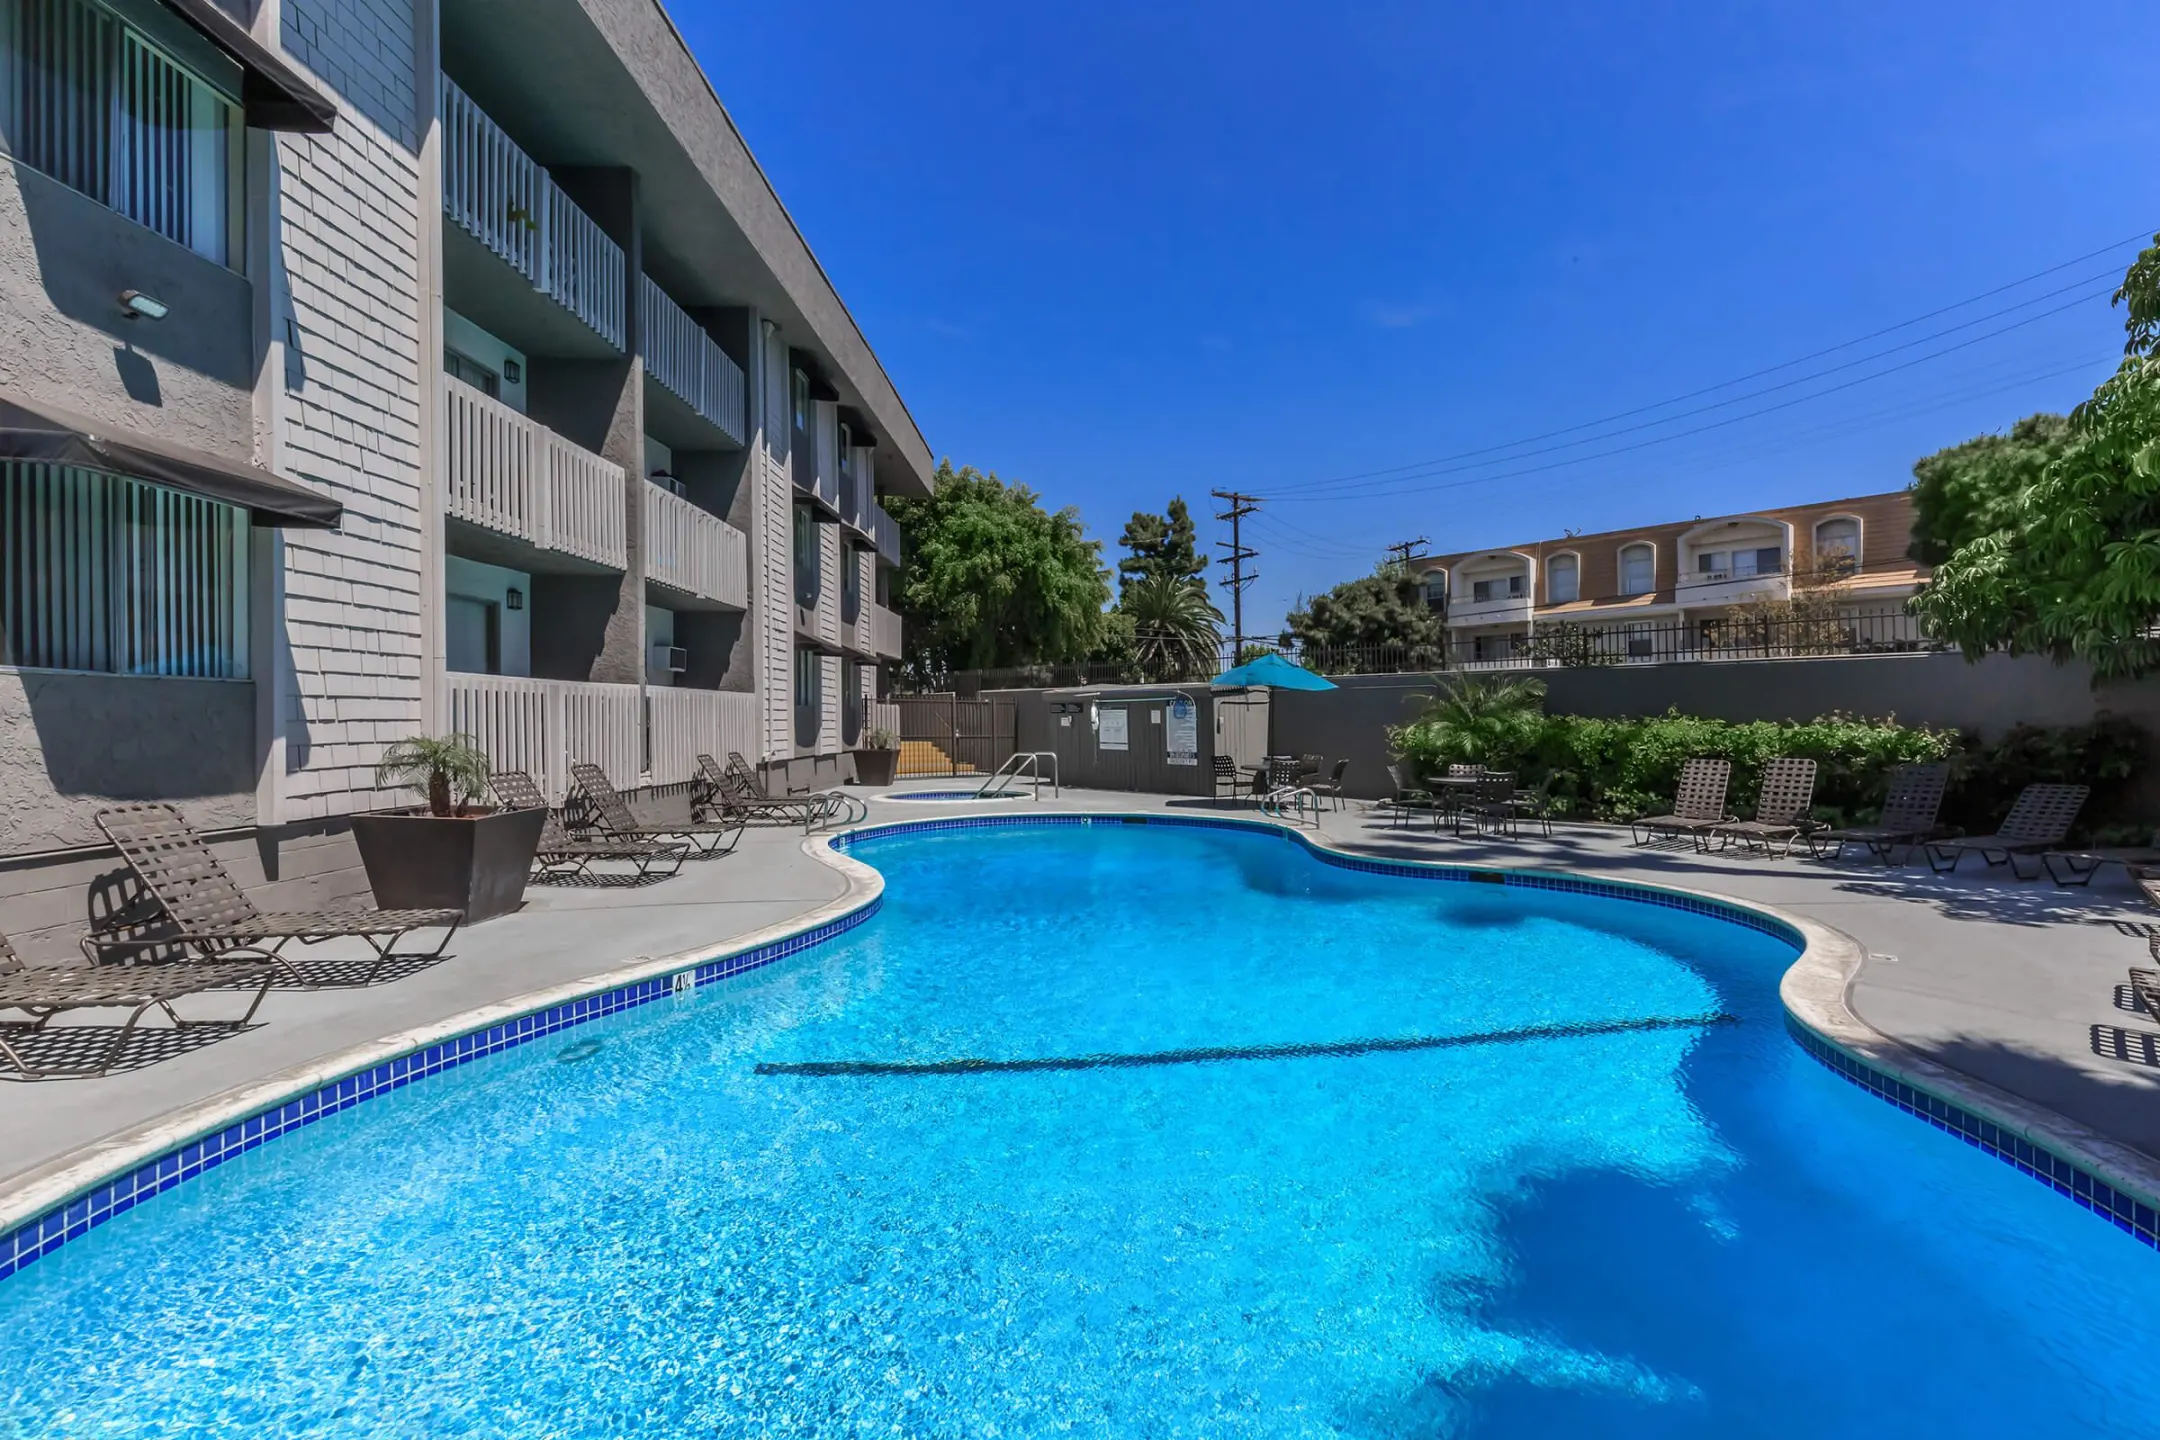 Pool - Pacific View Apartment Homes - Long Beach, CA